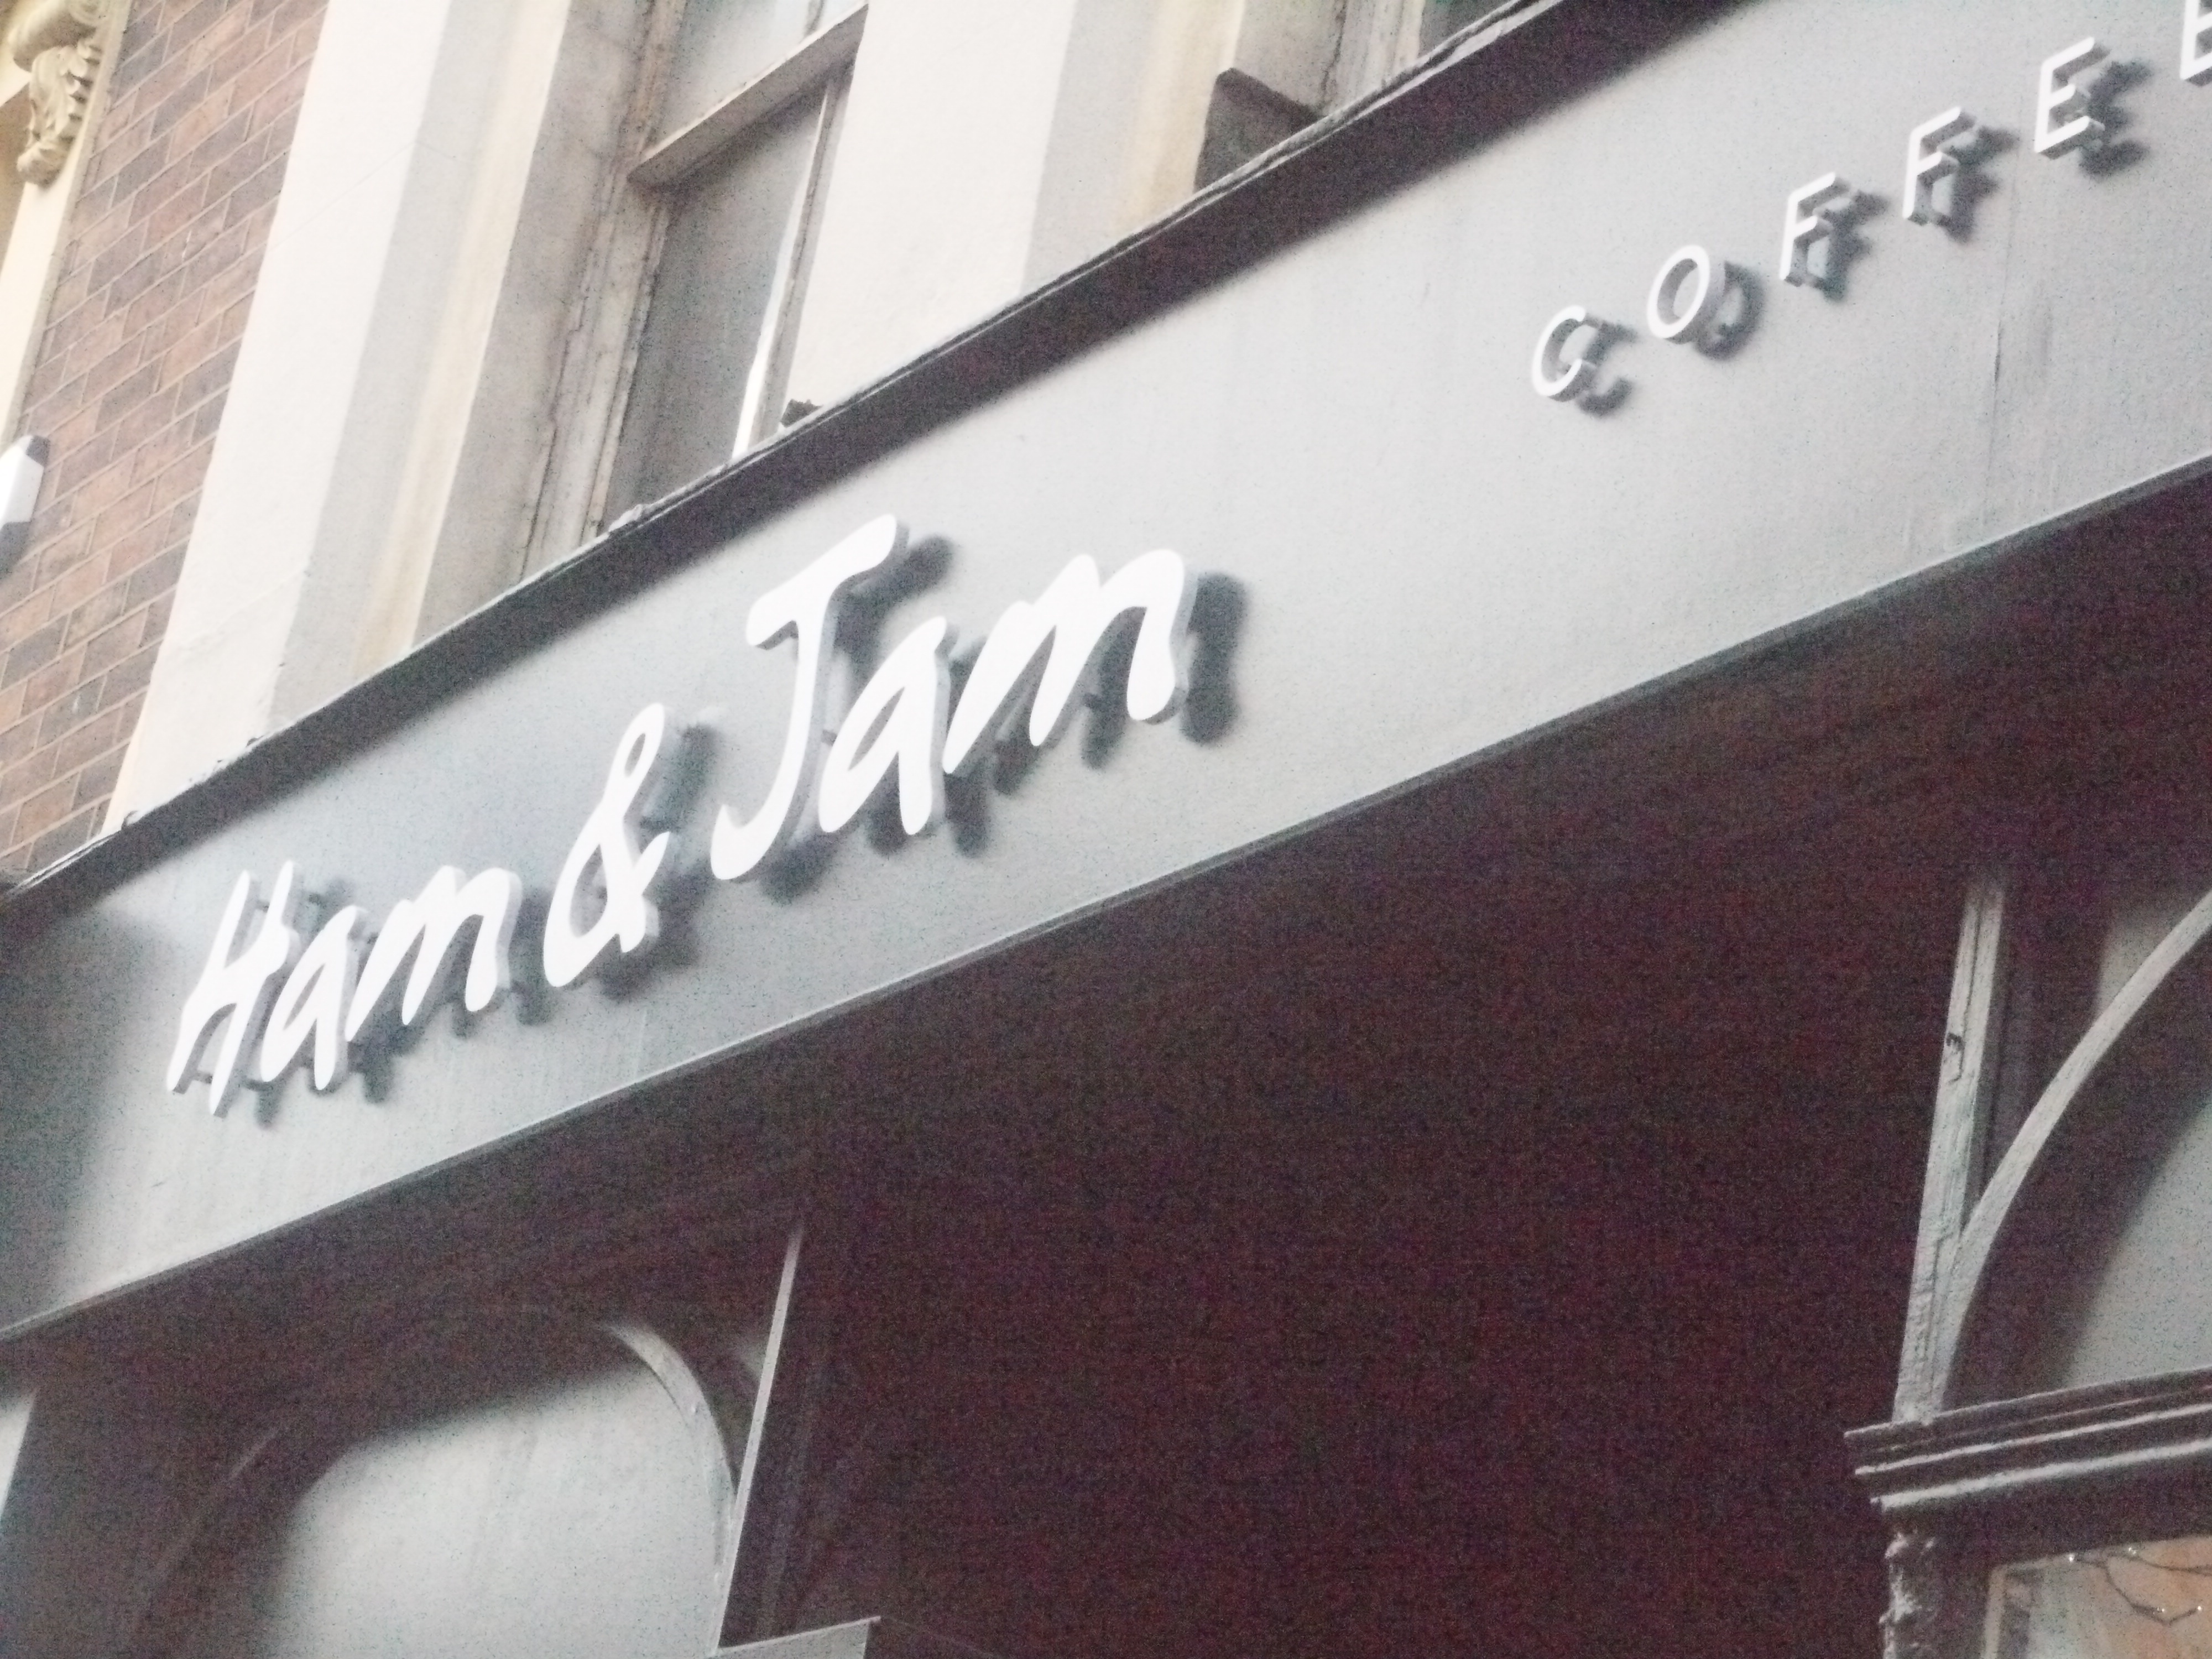 Photo taken by me – The Ham & Jam Café, Preston